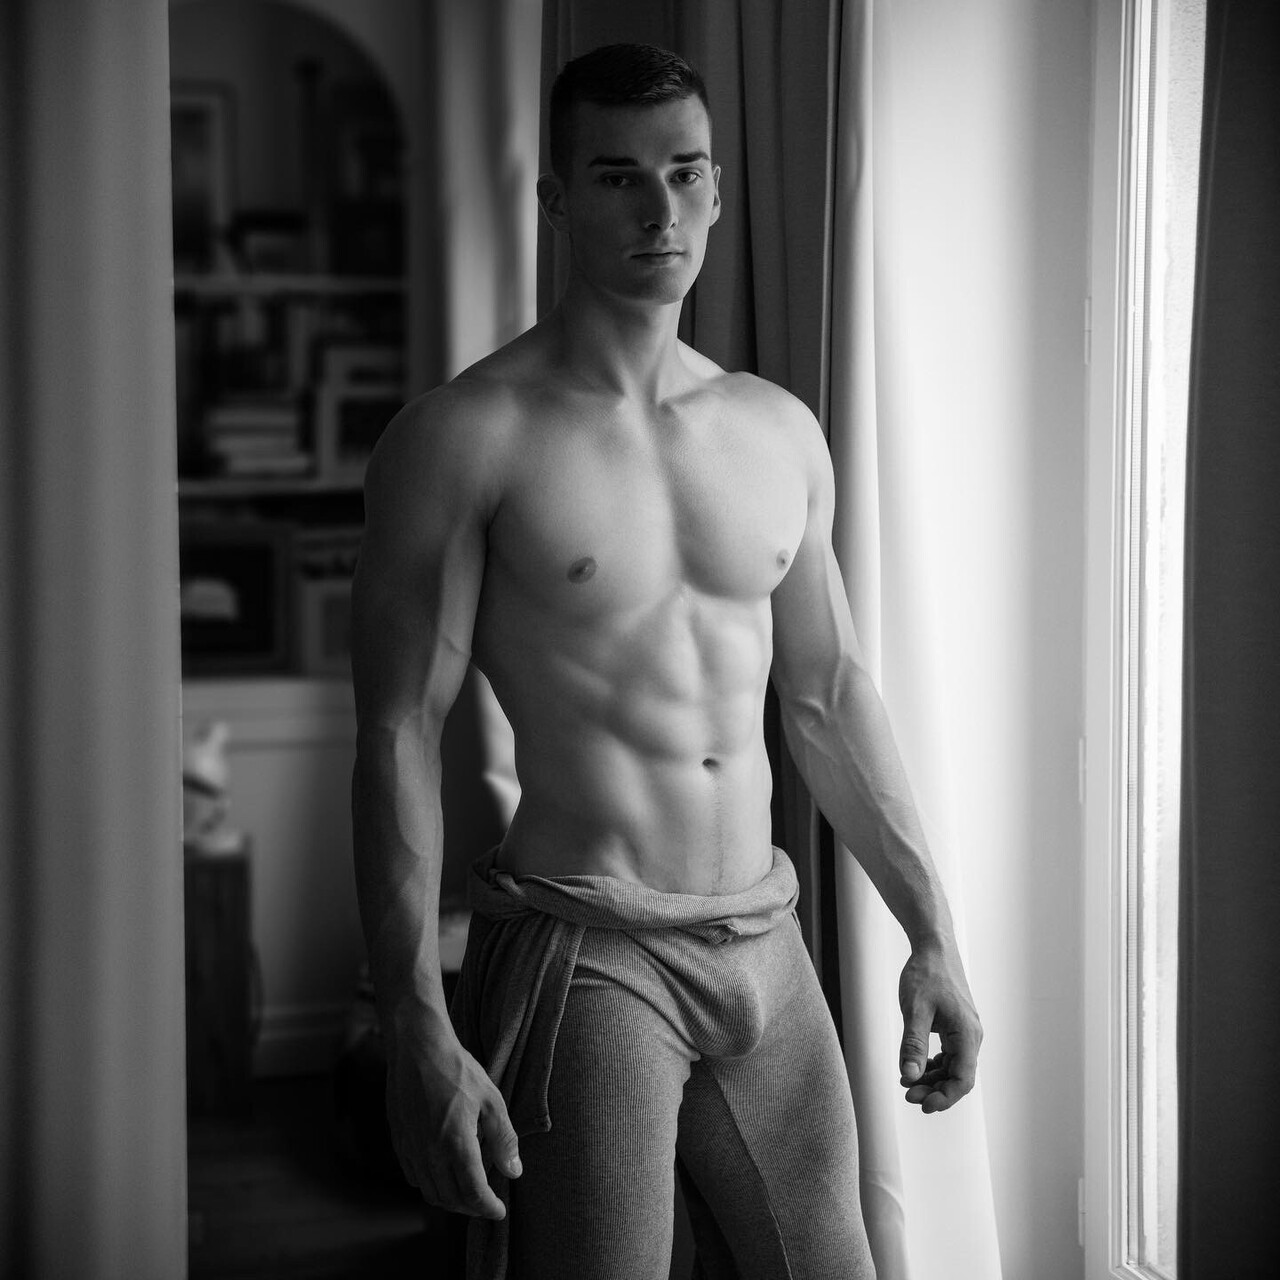 Hot Men In Underwear, Enjoy! | Daily Dudes @ Dude Dump